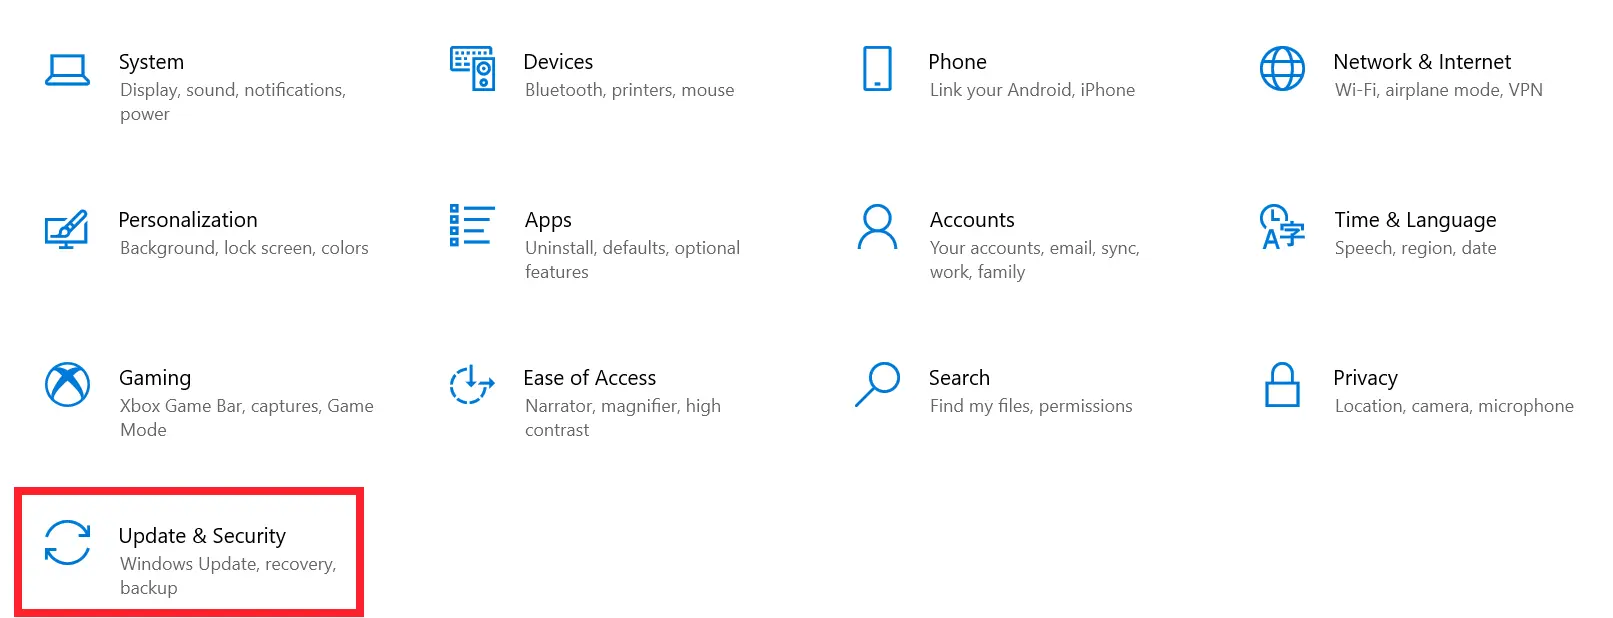 Update & Security" settings in Windows